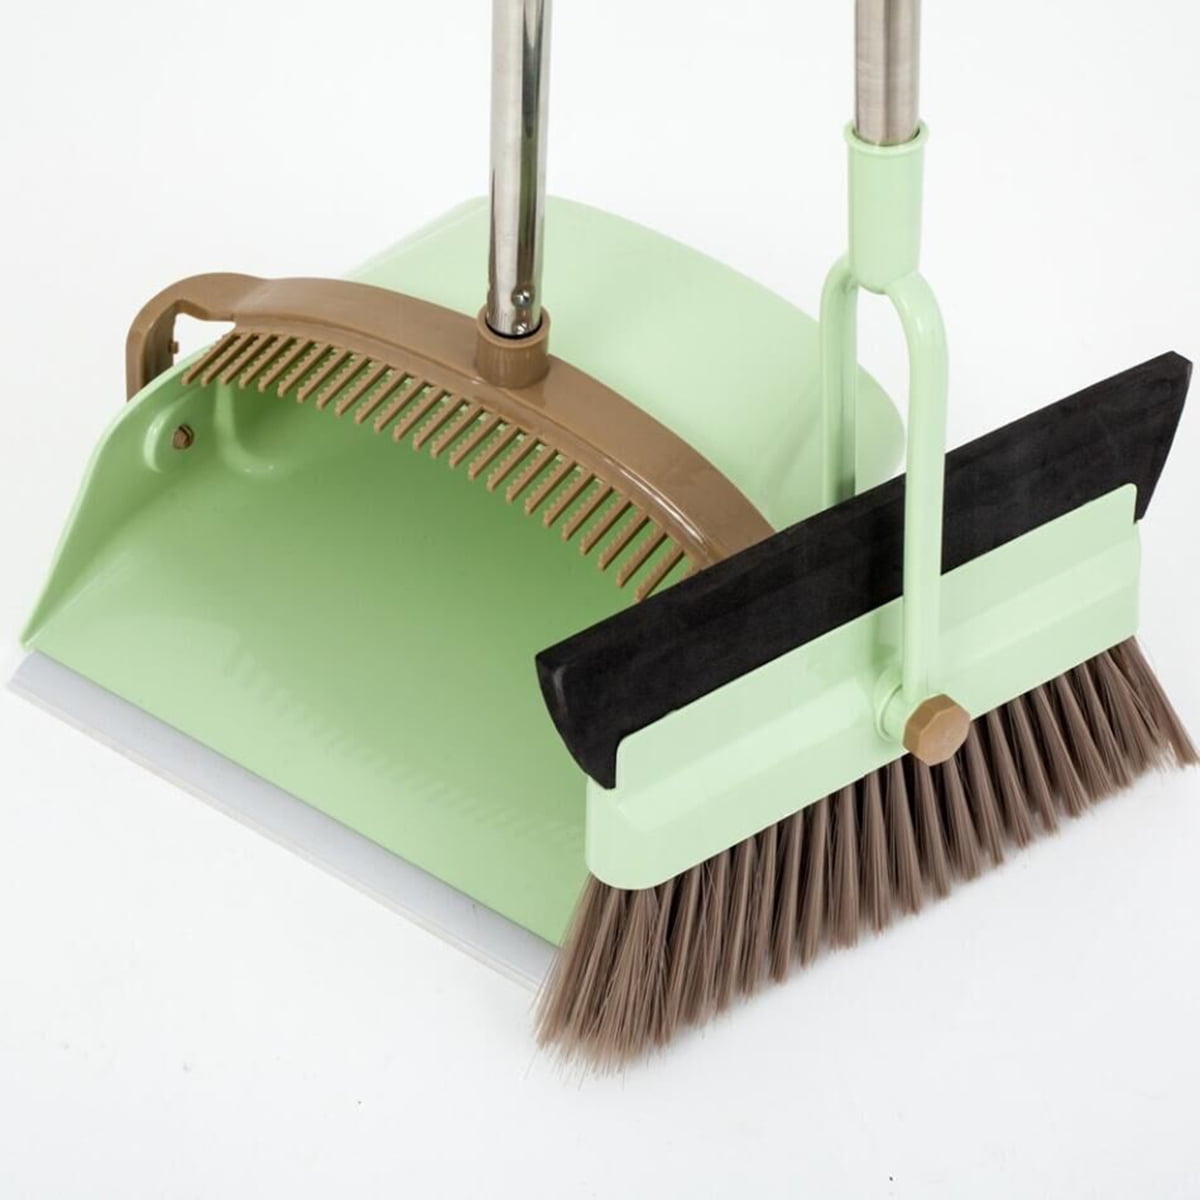 wisp broom and dustpan for sale